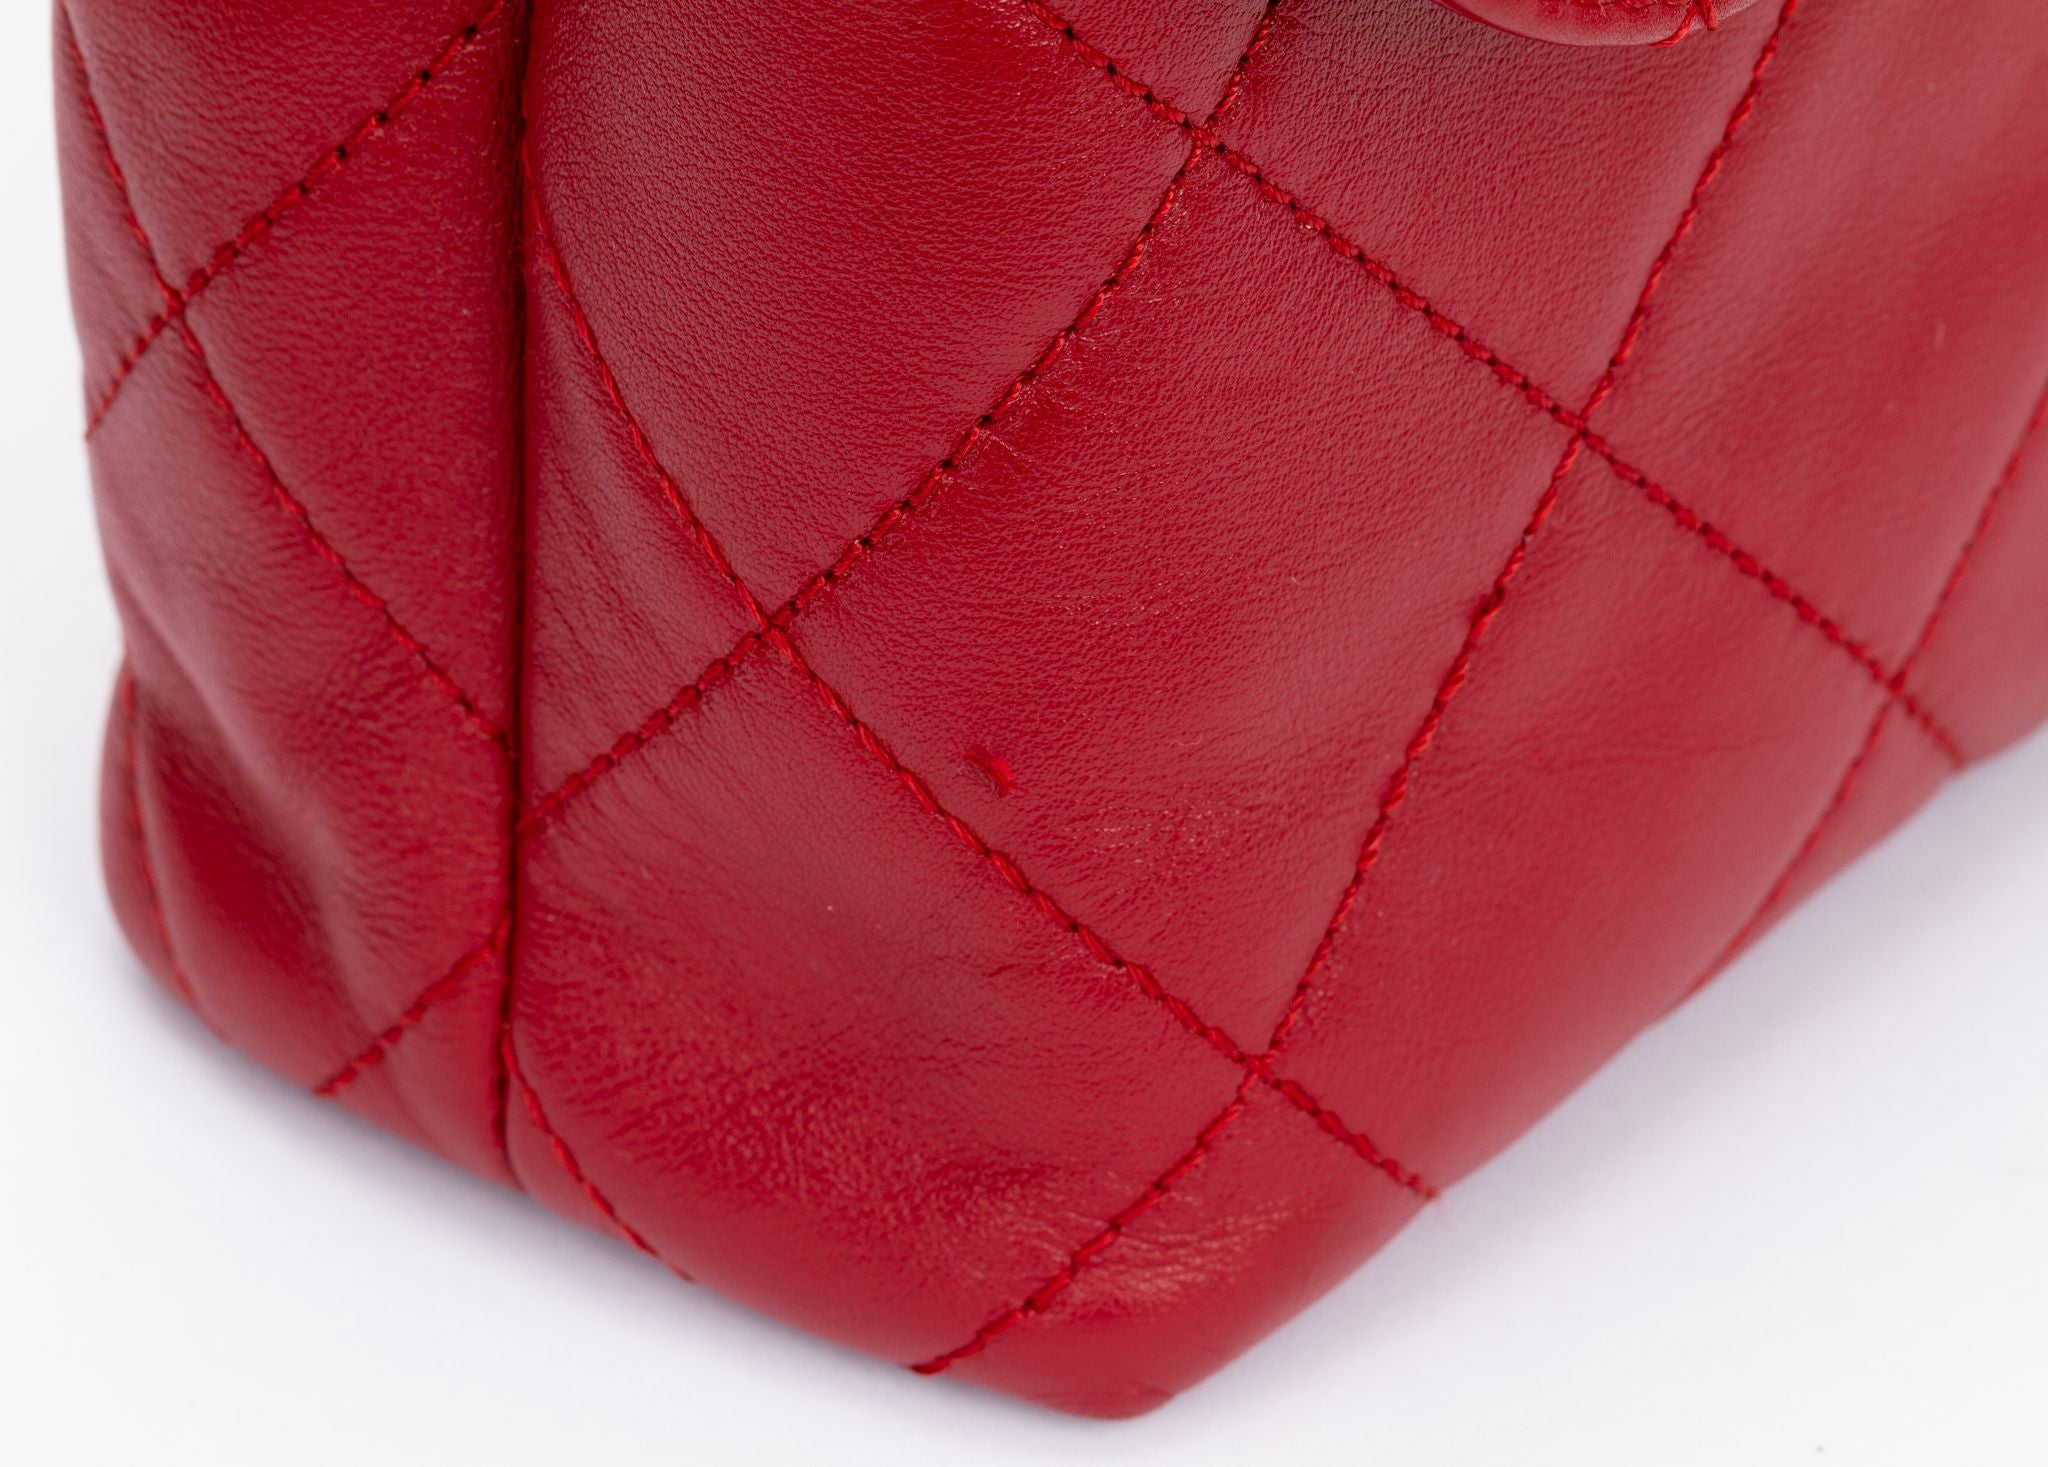 CHANEL RED CC CAVIAR LEATHER SHOULDER BAG - Still in fashion